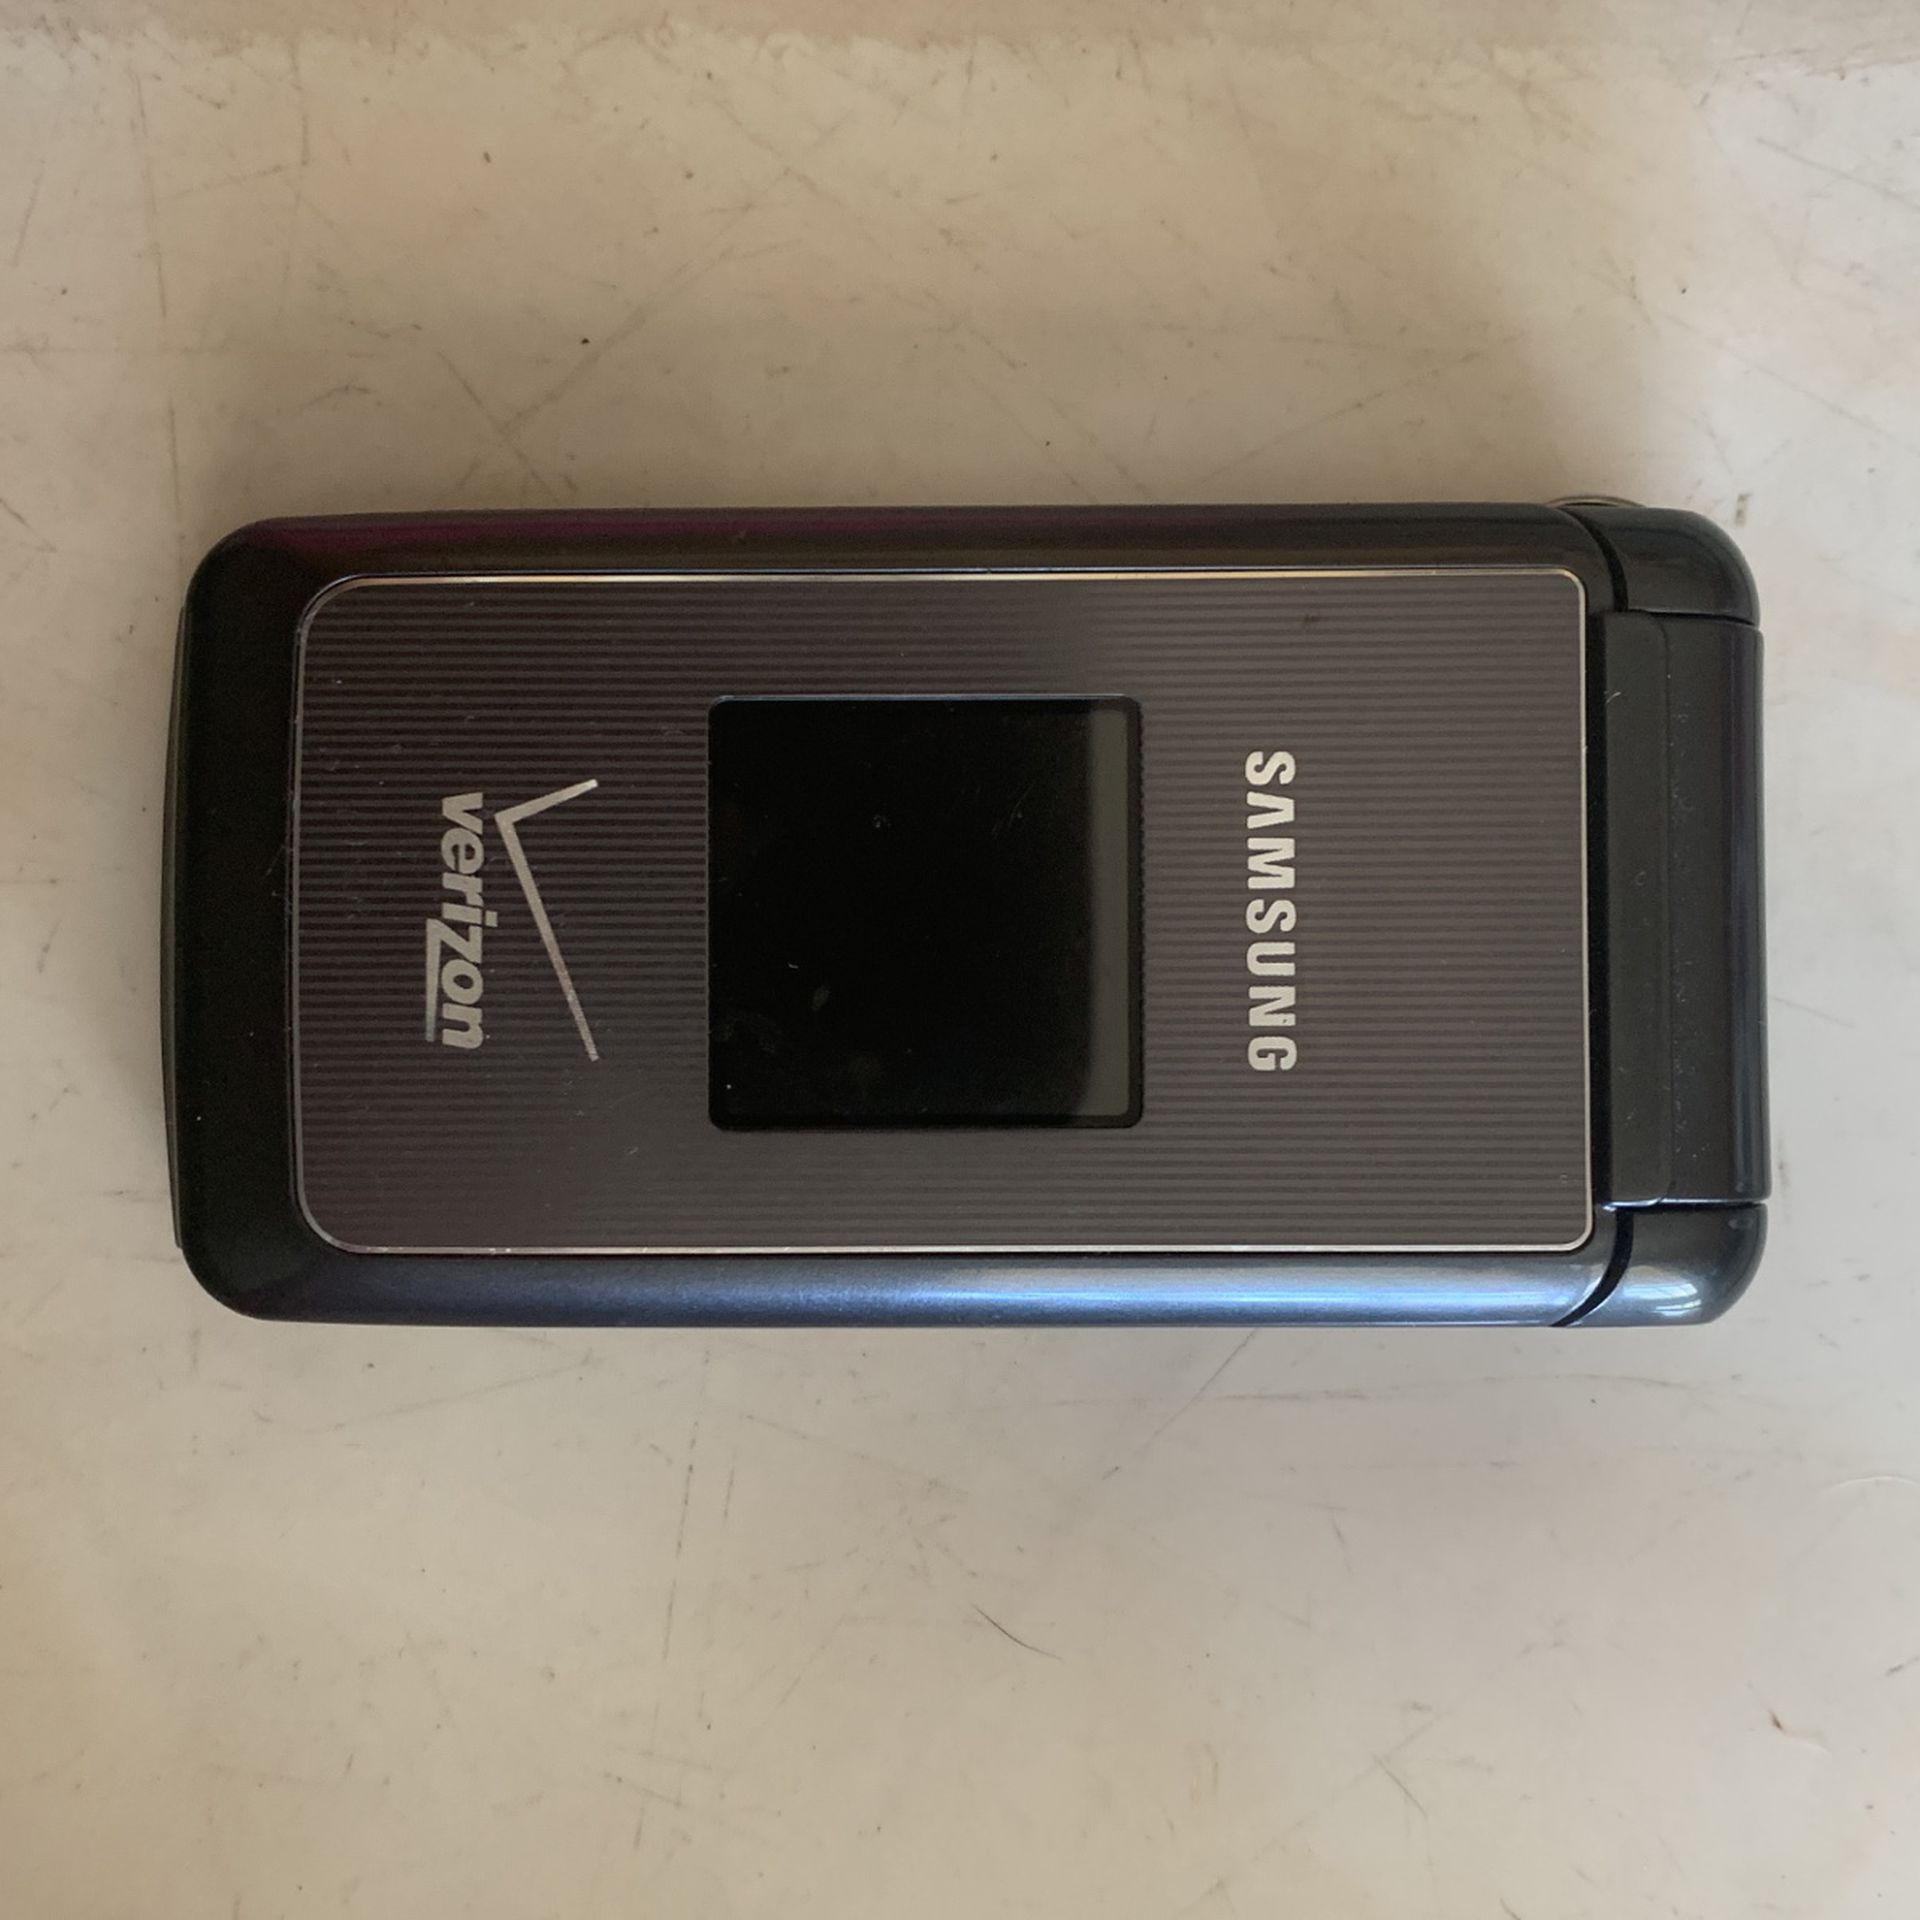 Samsung Flip Phone